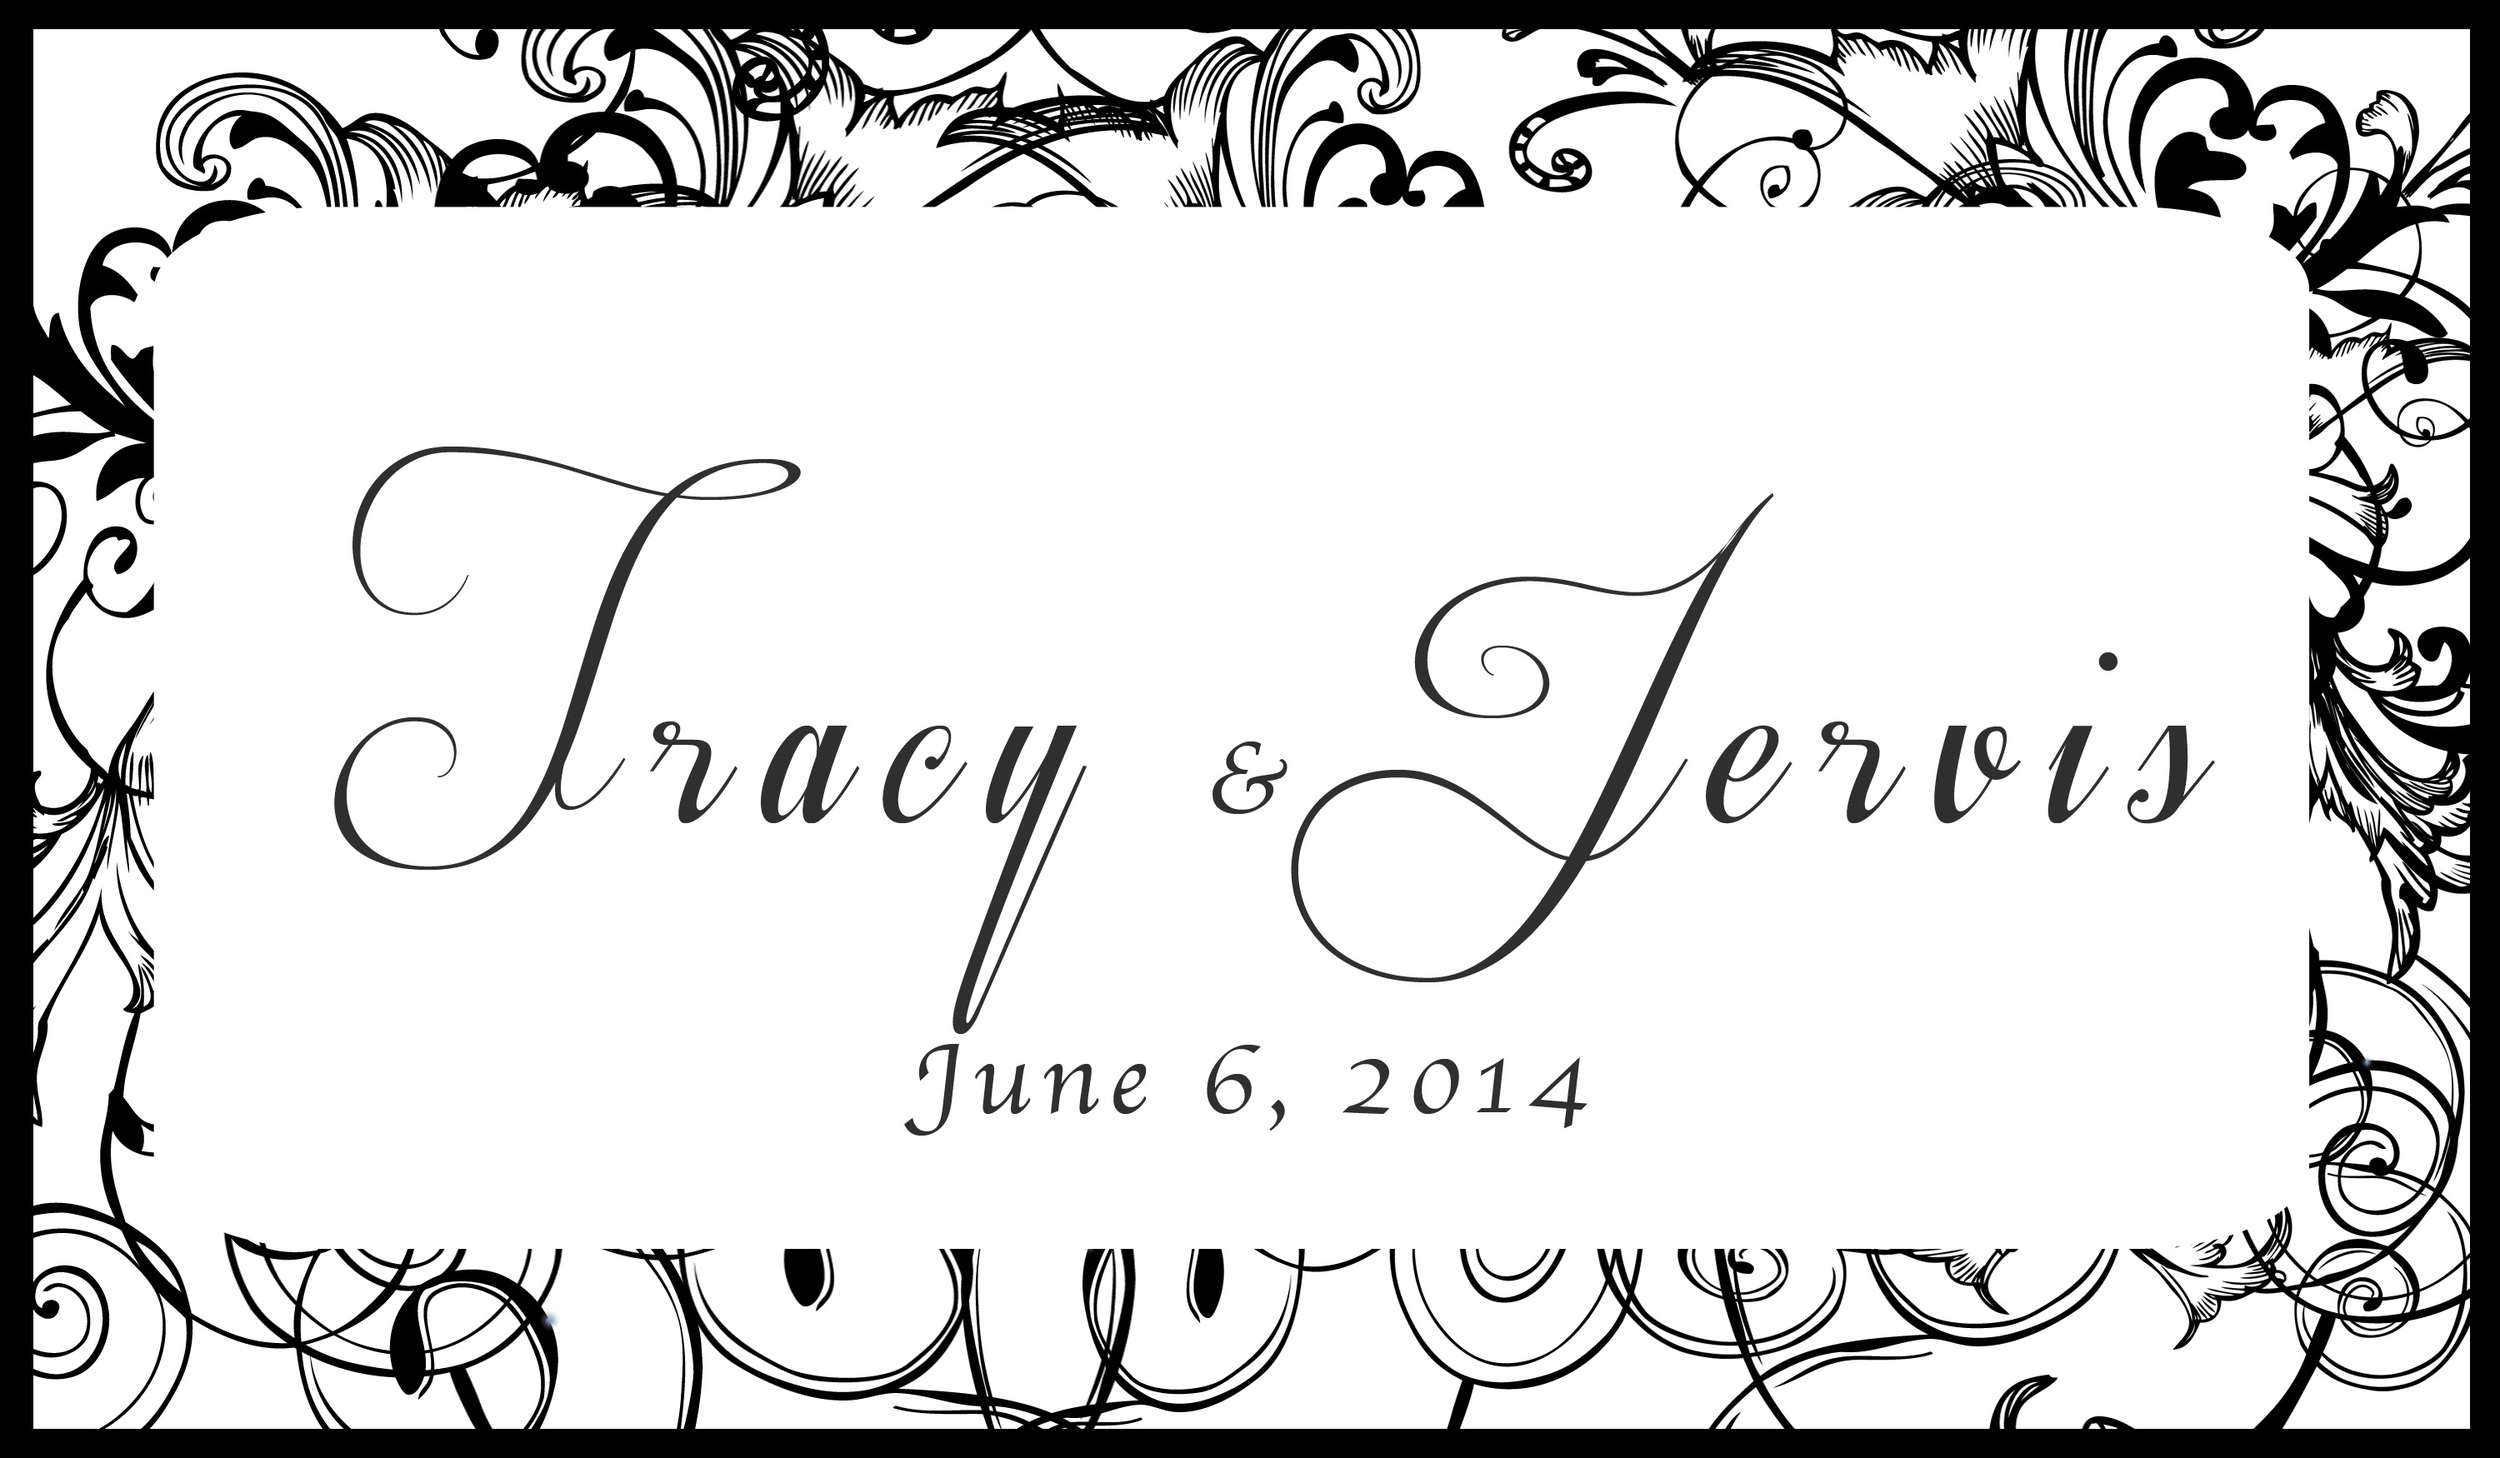 Jervis & Tracy B&W - Respective Font.jpg